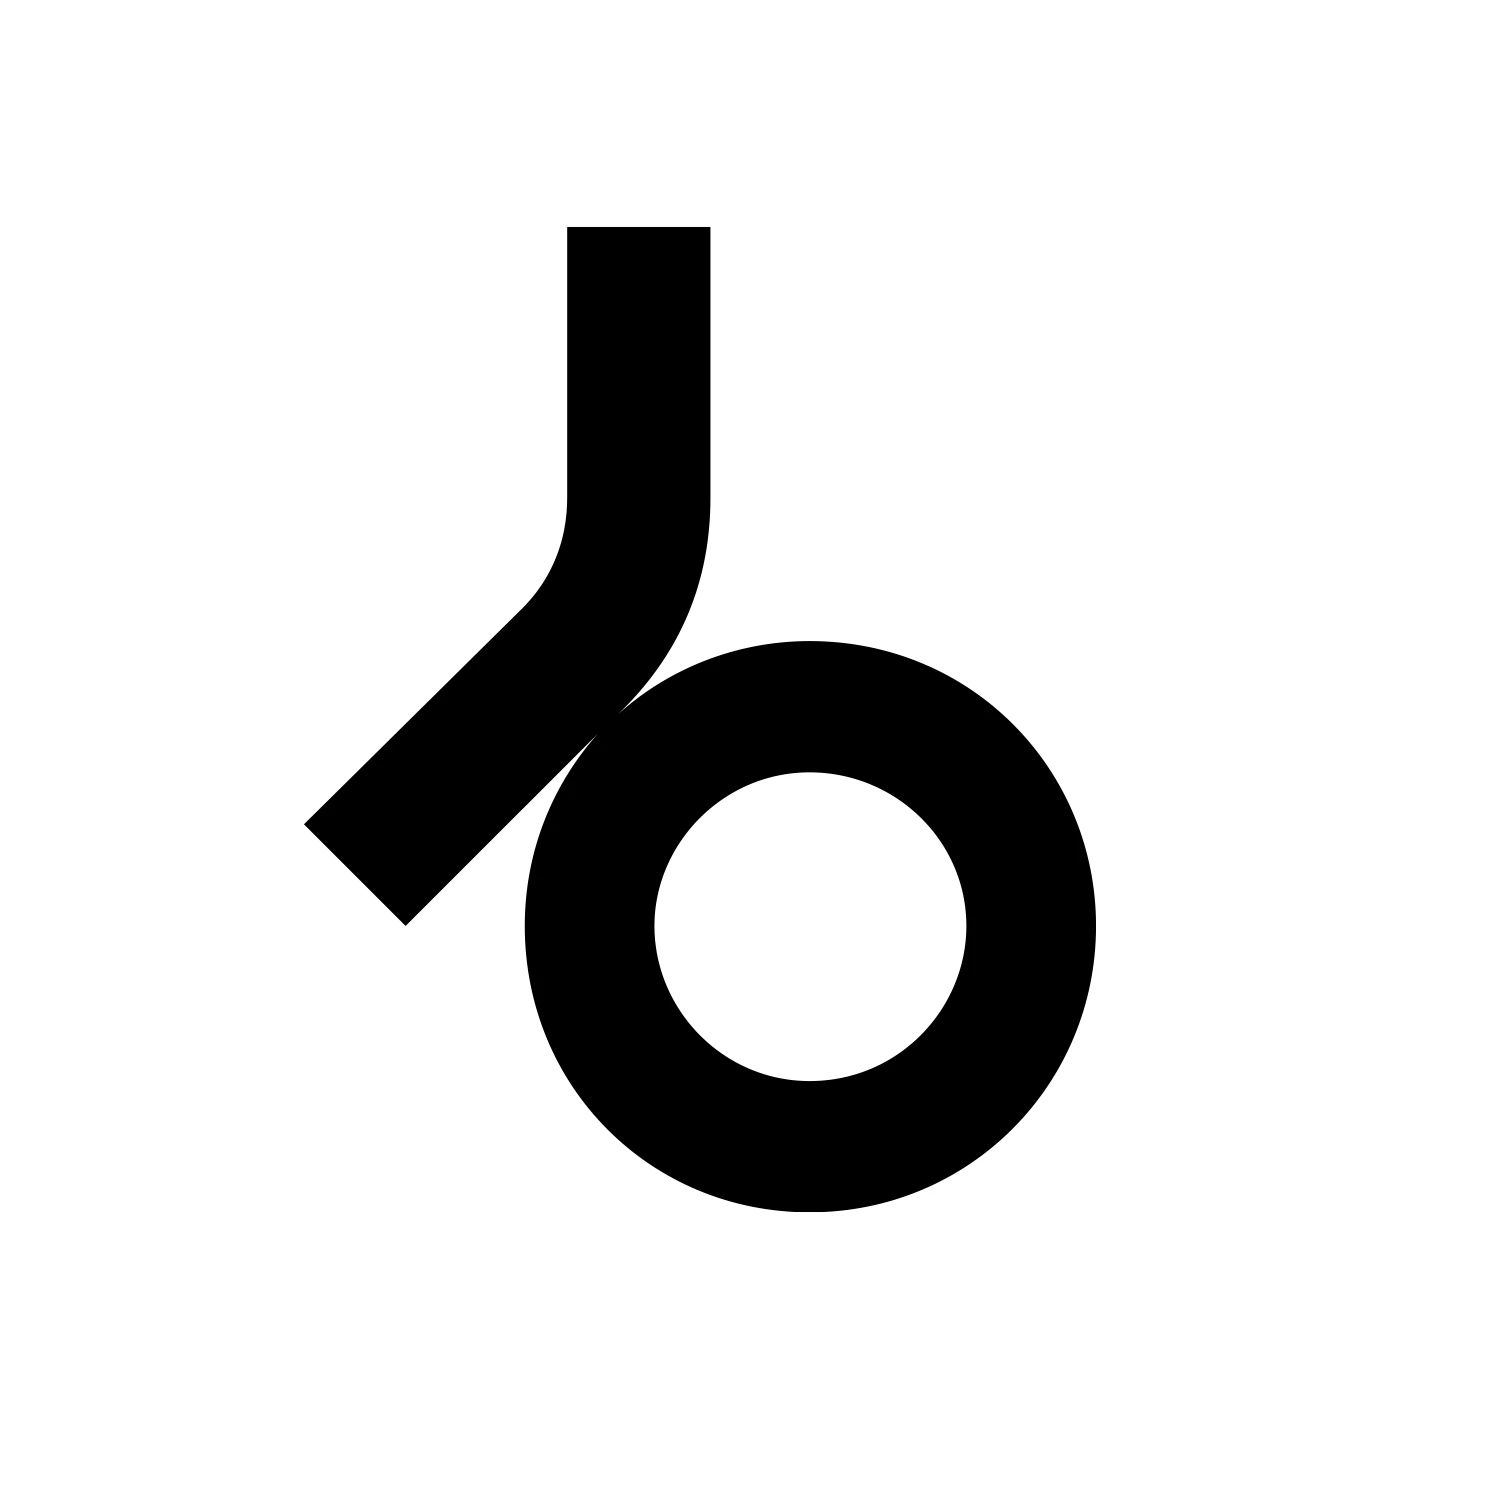 beatport Logo